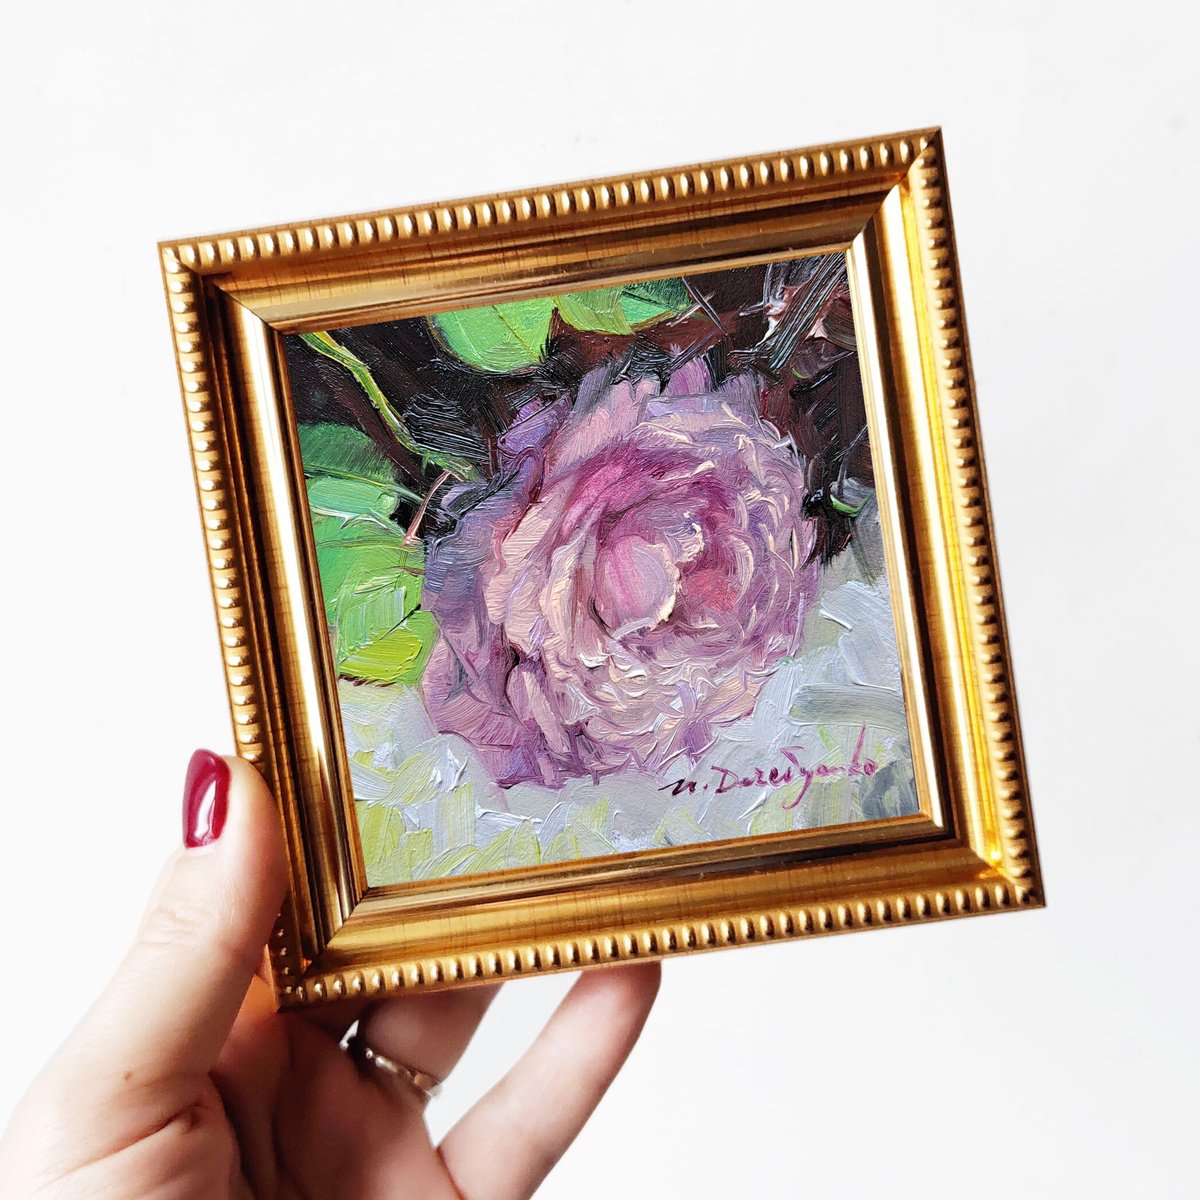 Roses flowers oil painting original, art Floral painting pale purple rose artwork impressi... by Nataly Derevyanko